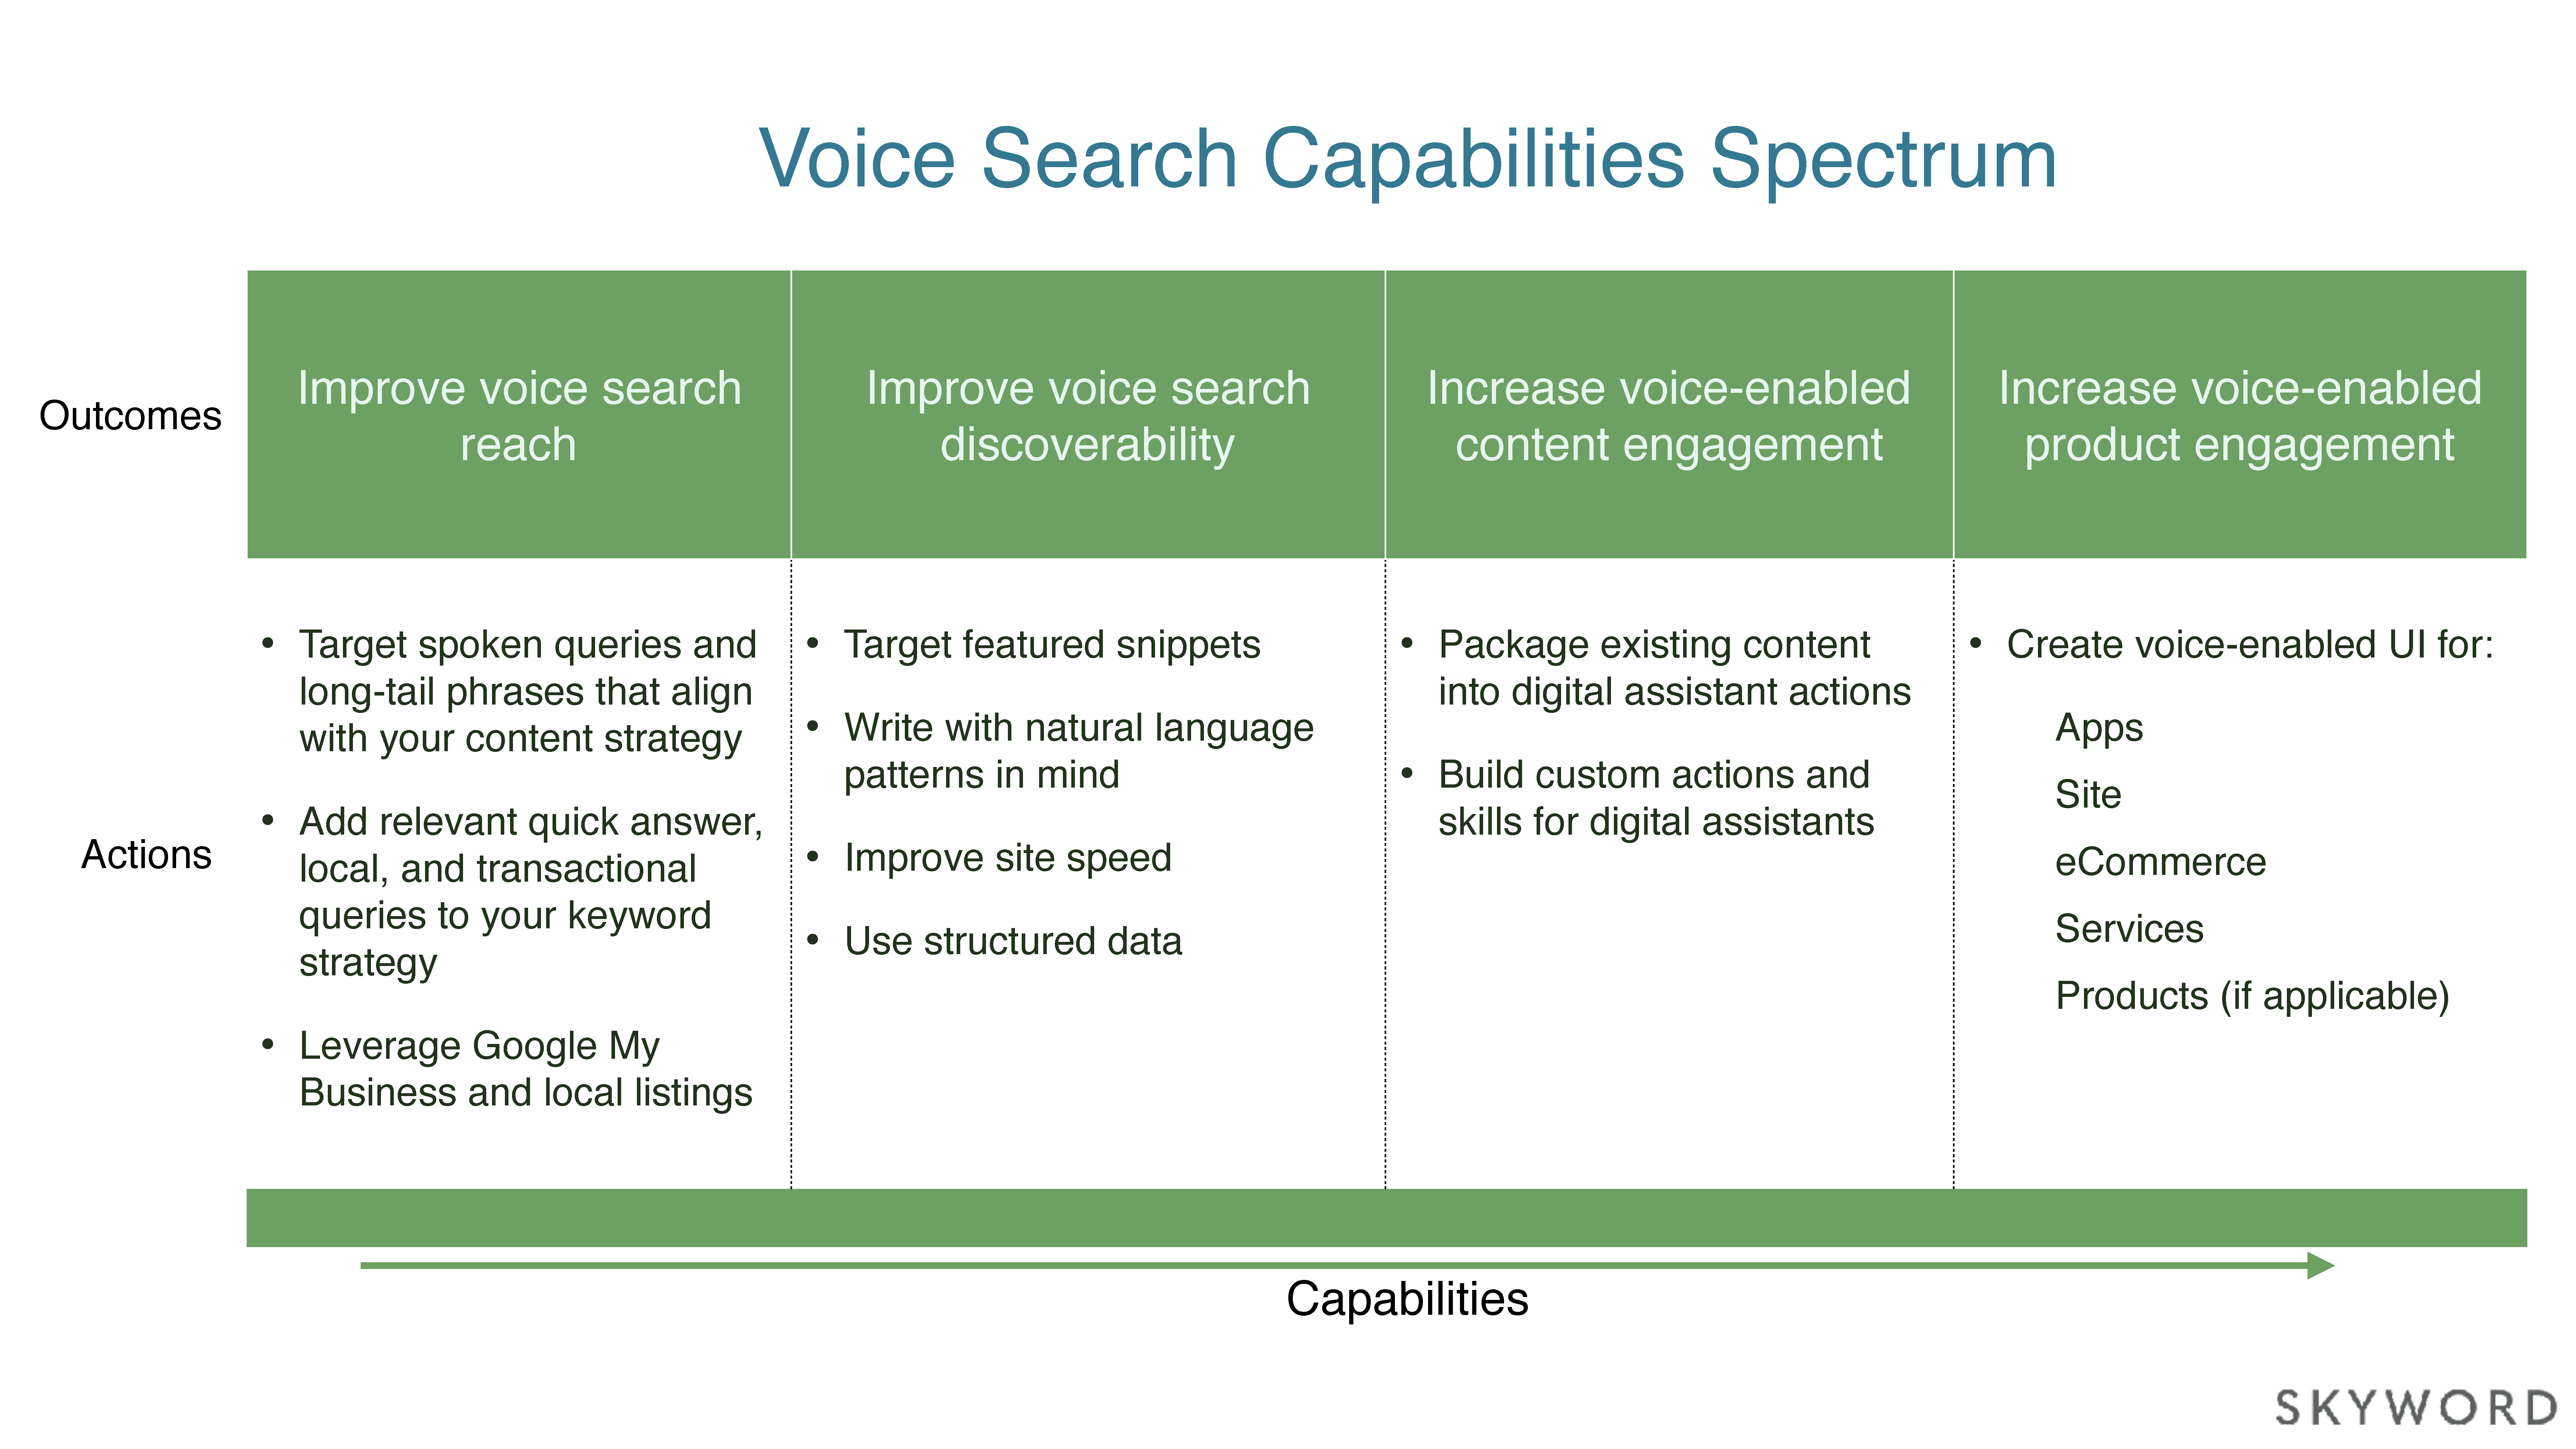 Skyword Voice Search Capabilities Spectrum